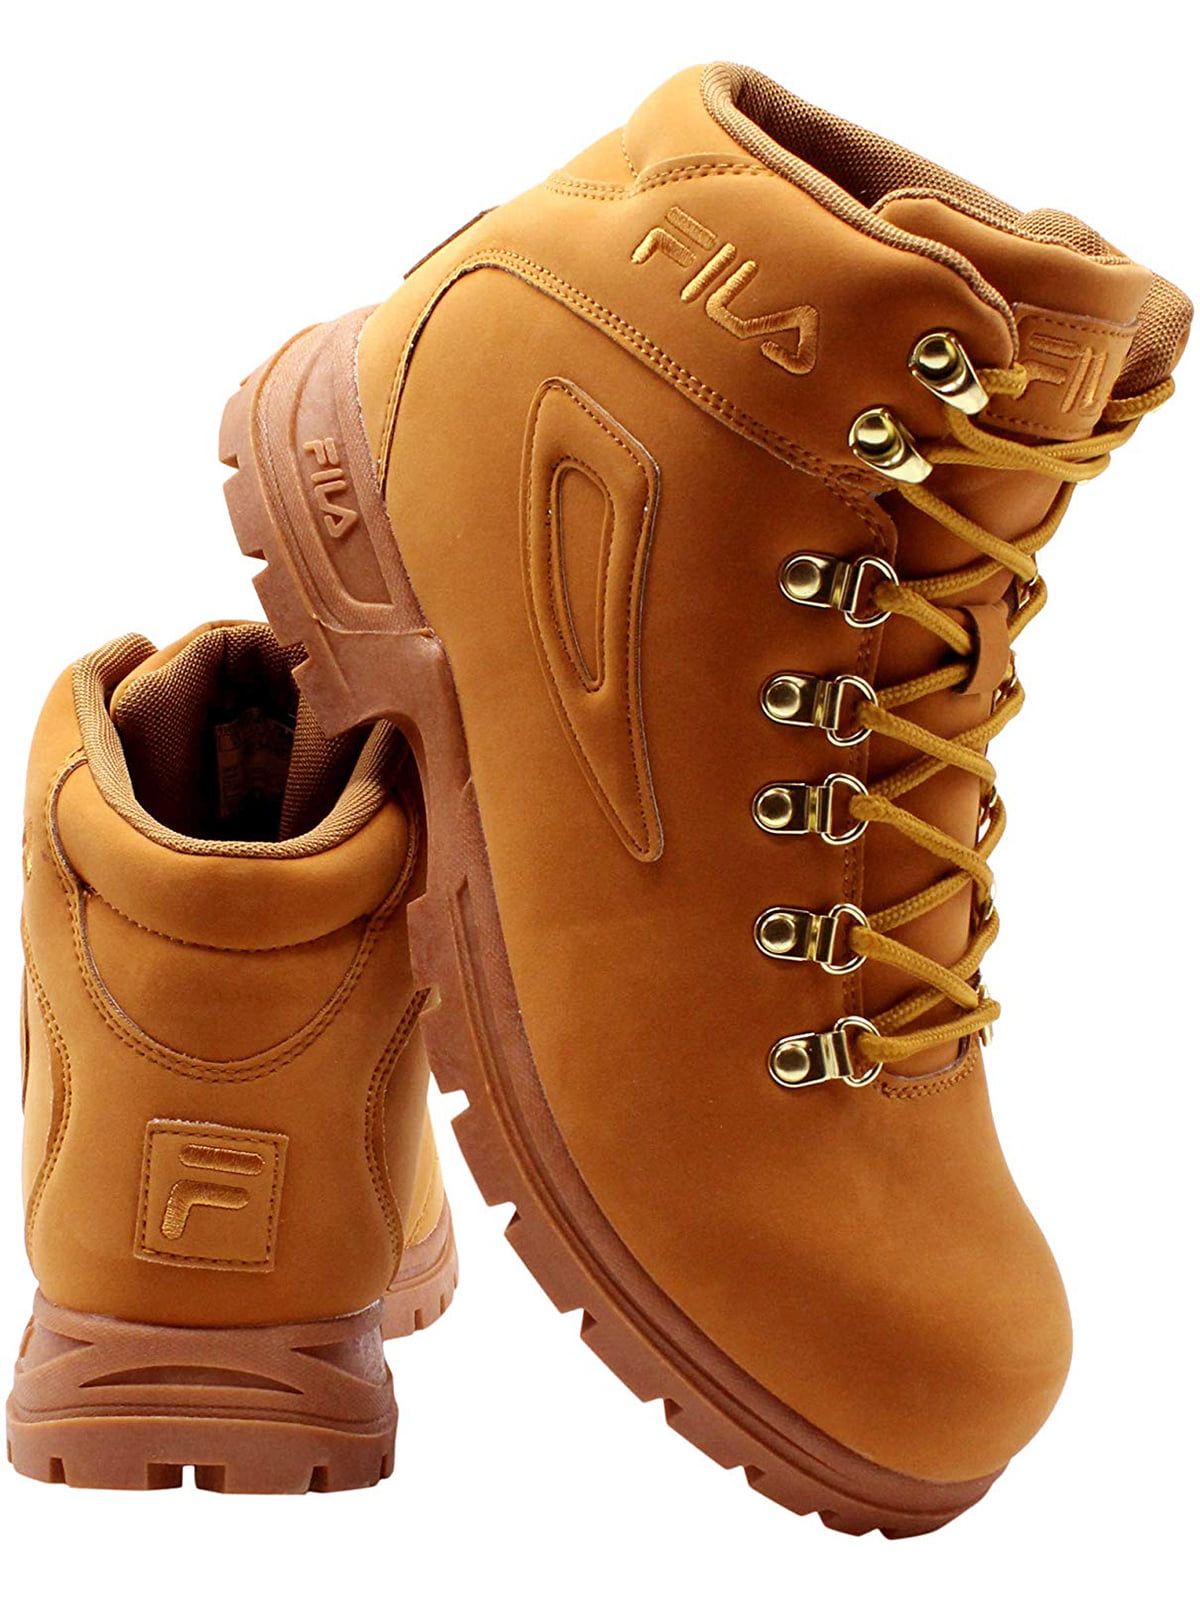 Buy > fila womens hiking shoes > in stock